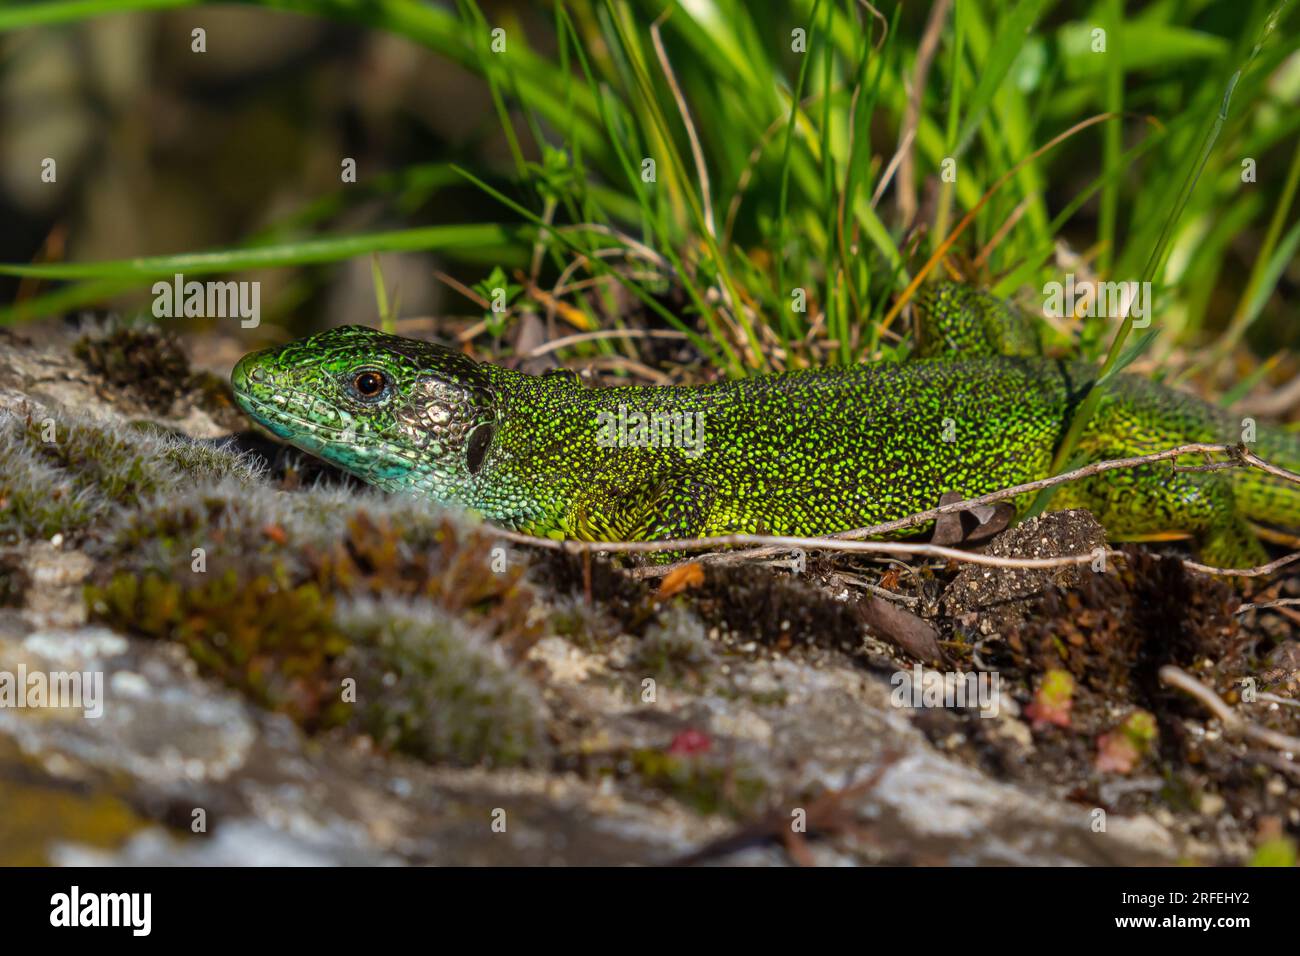 European green lizard Lacerta viridis emerging from the grass exposing its beautiful colors. Stock Photo